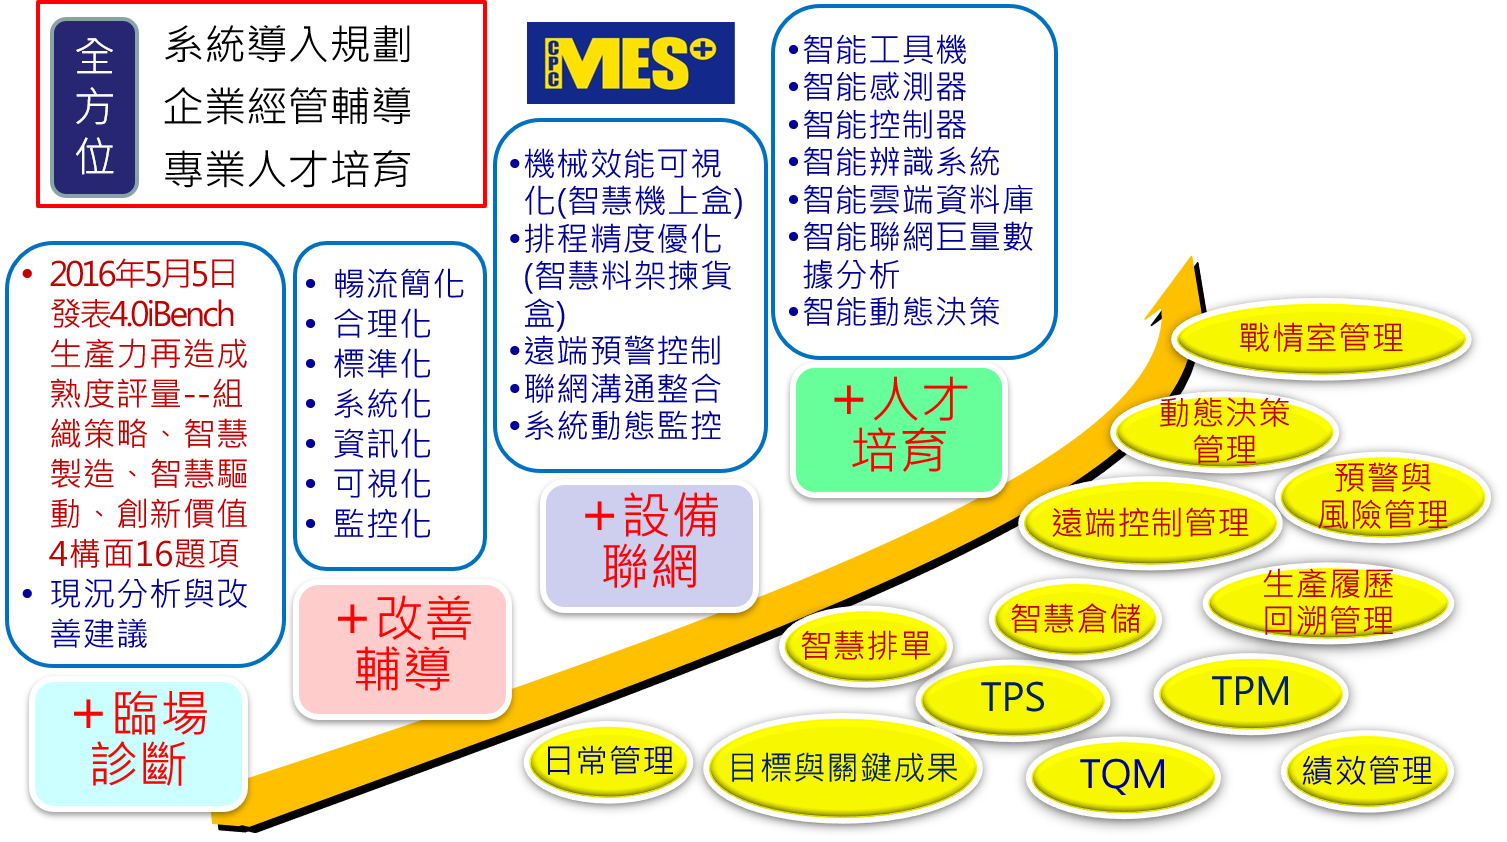 CPC_MES产品架构图